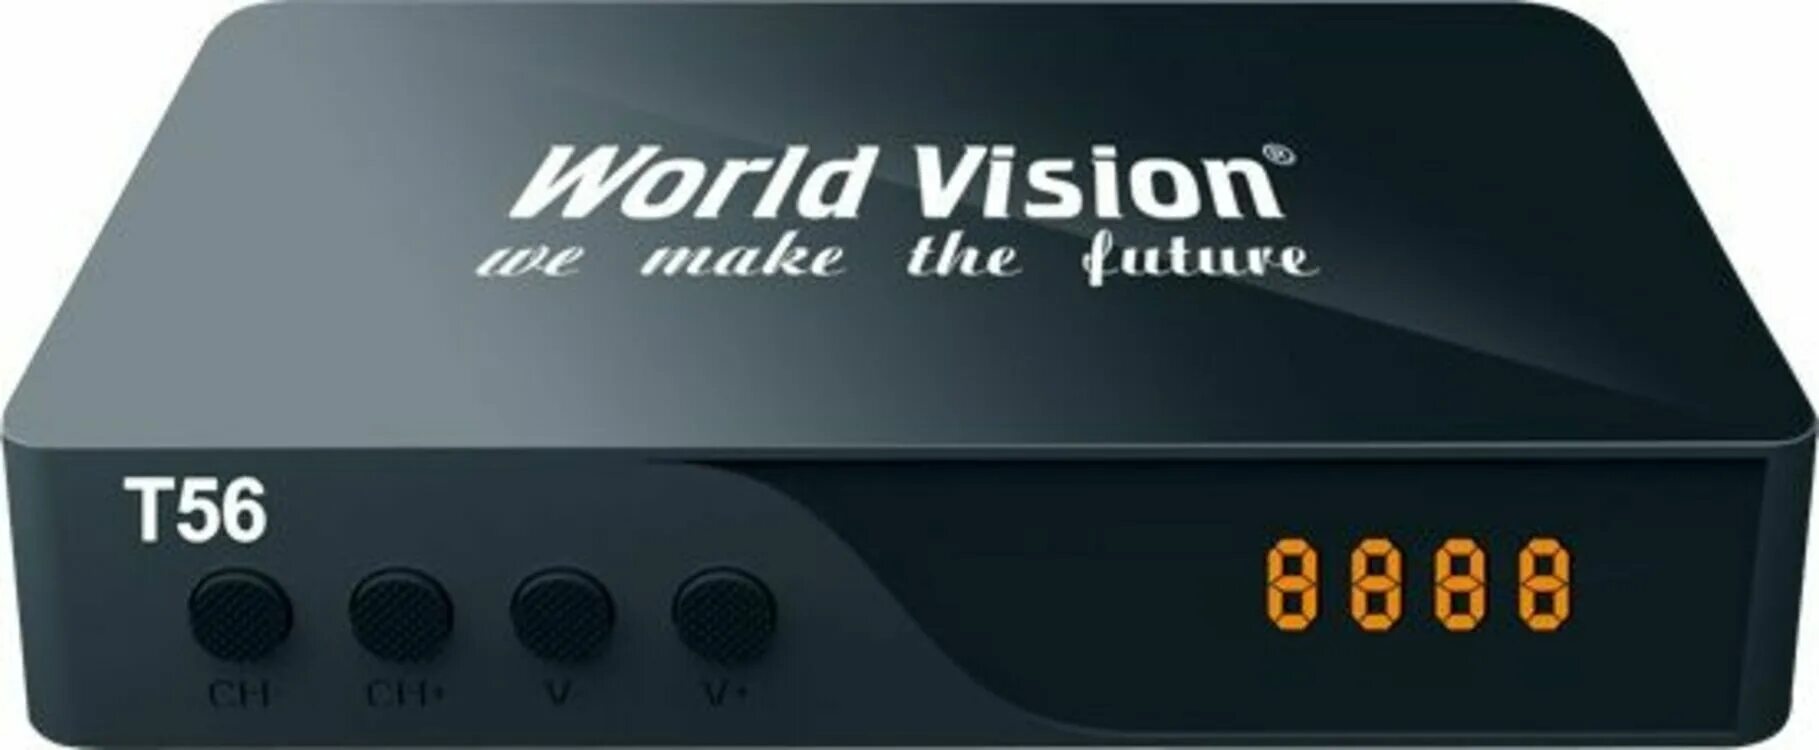 World Vision t59m. TV-тюнер World Vision t59d. Цифровой телевизионный приемник World Vision t625d4. TV-тюнер World Vision force1+. World vision телевизоры